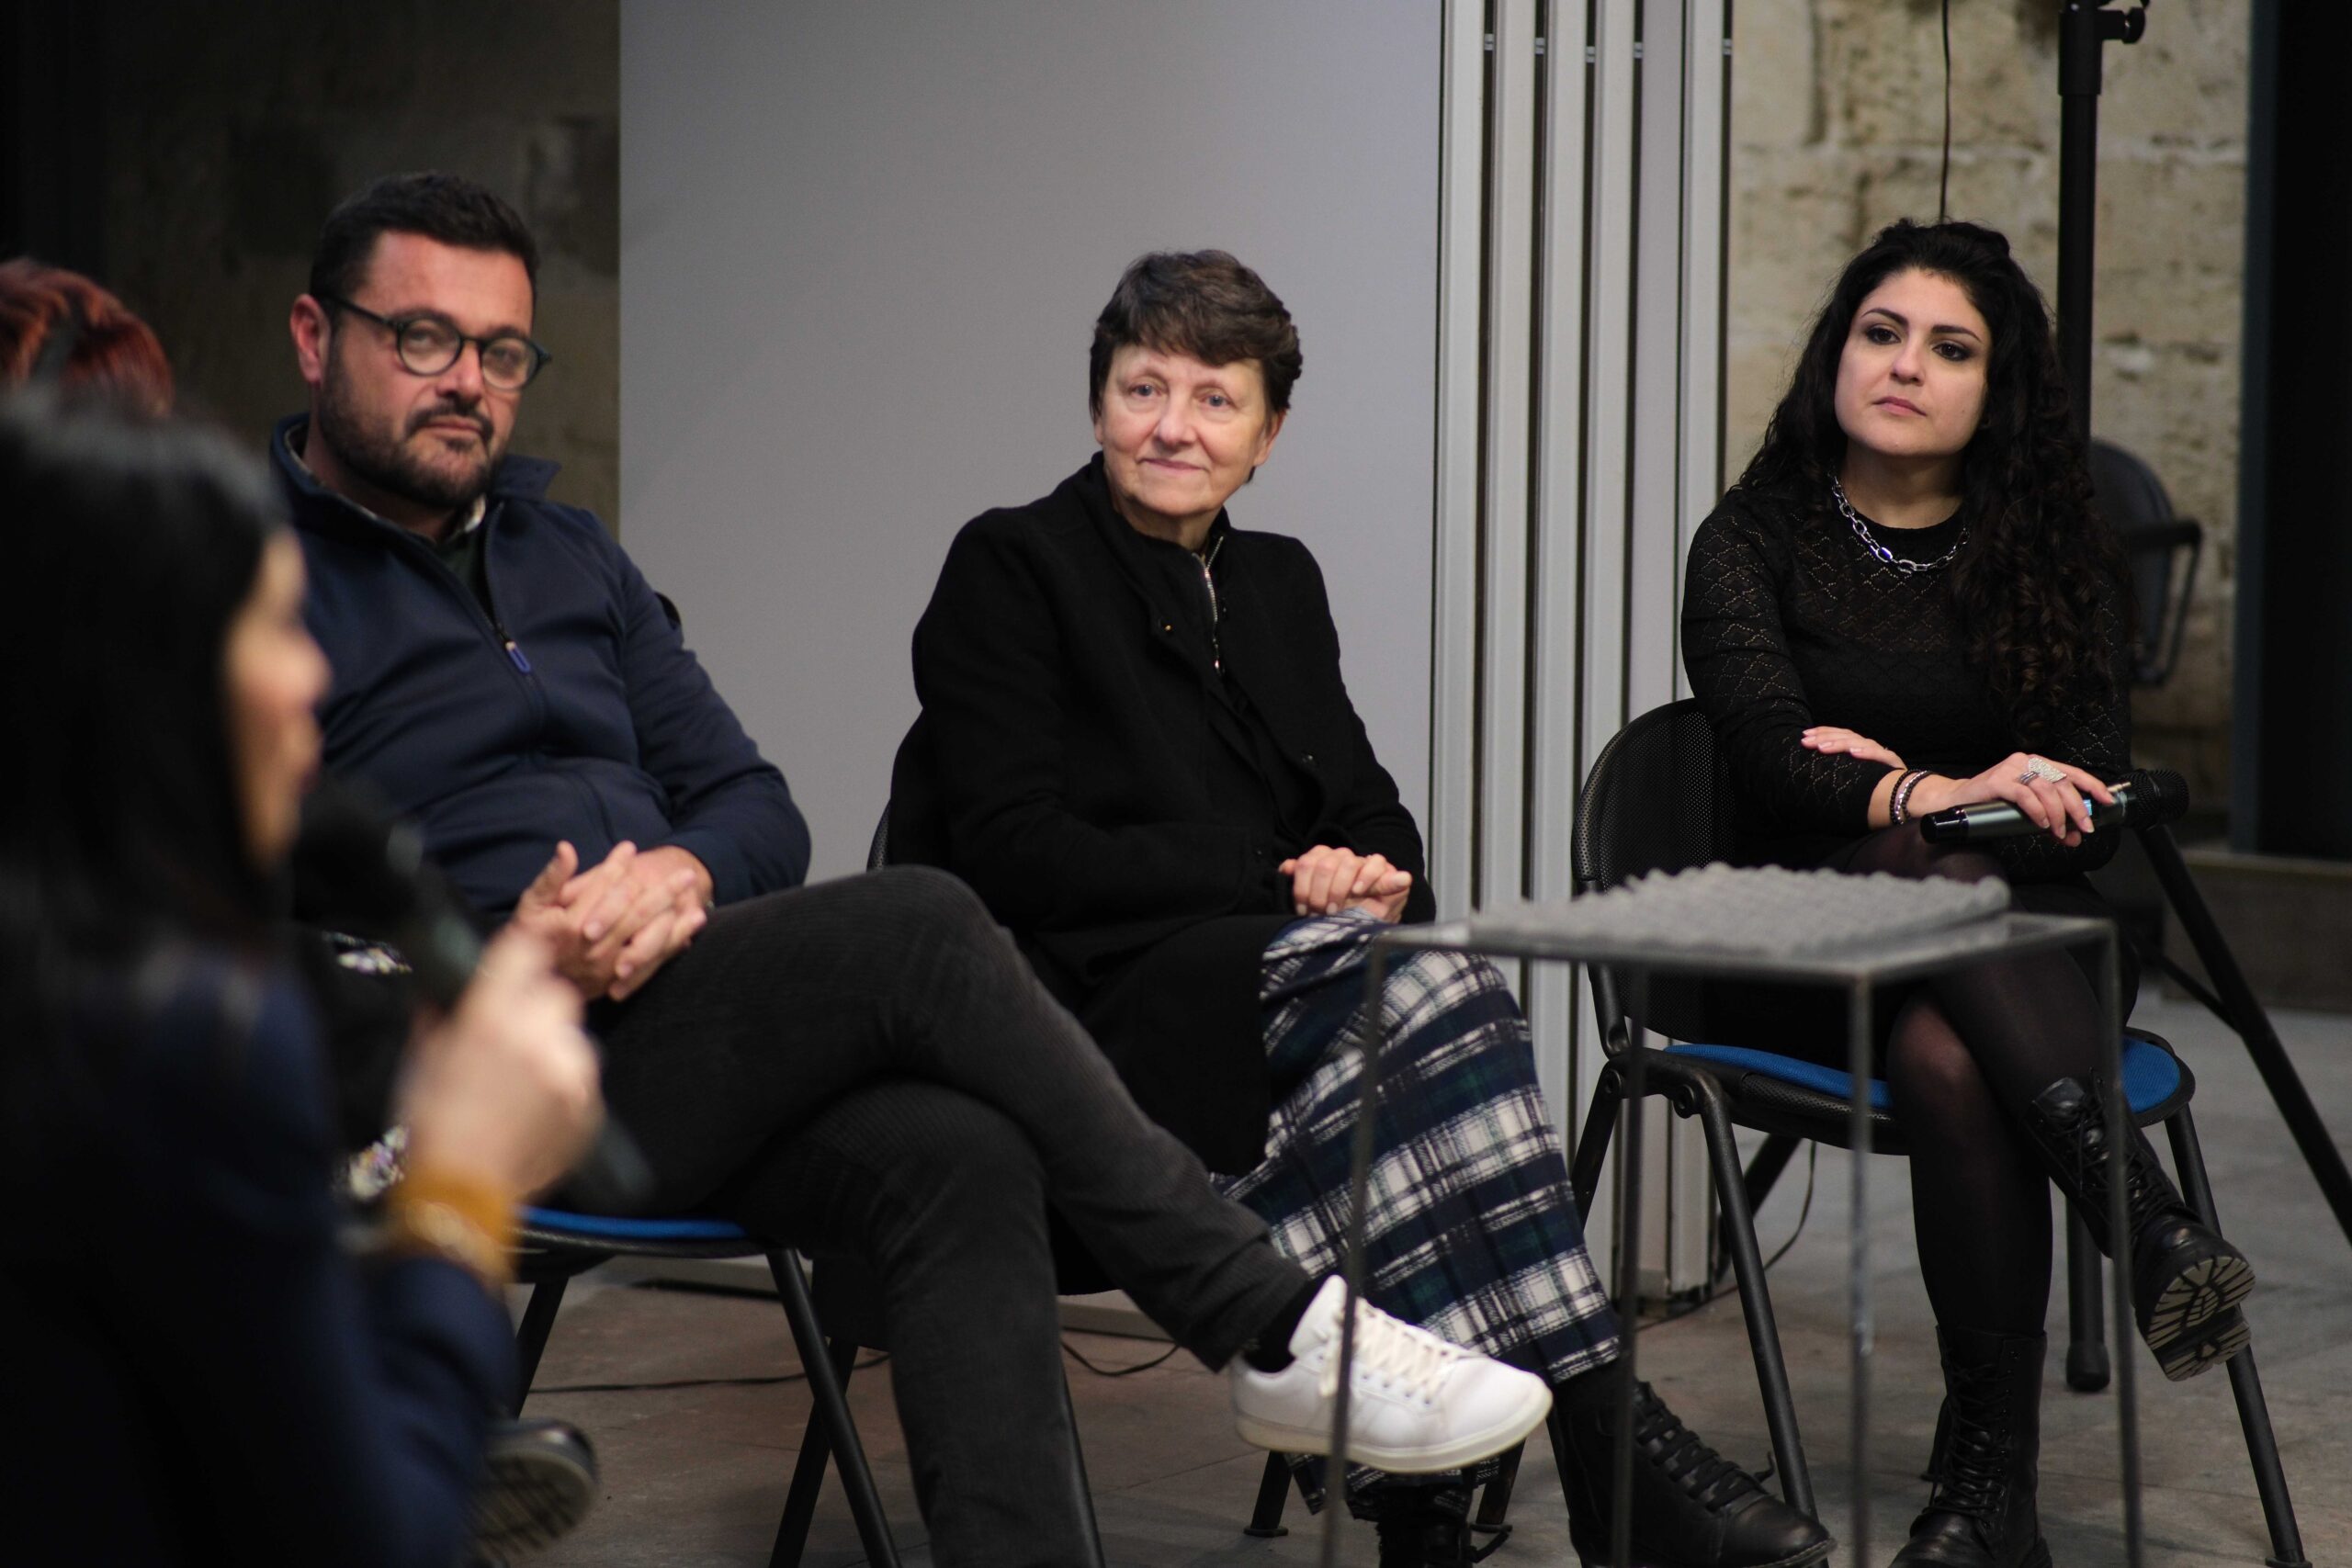 Efisio Carbone, Marilena Pitturru and Roberta Congiu listening to Ivana Salis - Photo: Antonello Casu